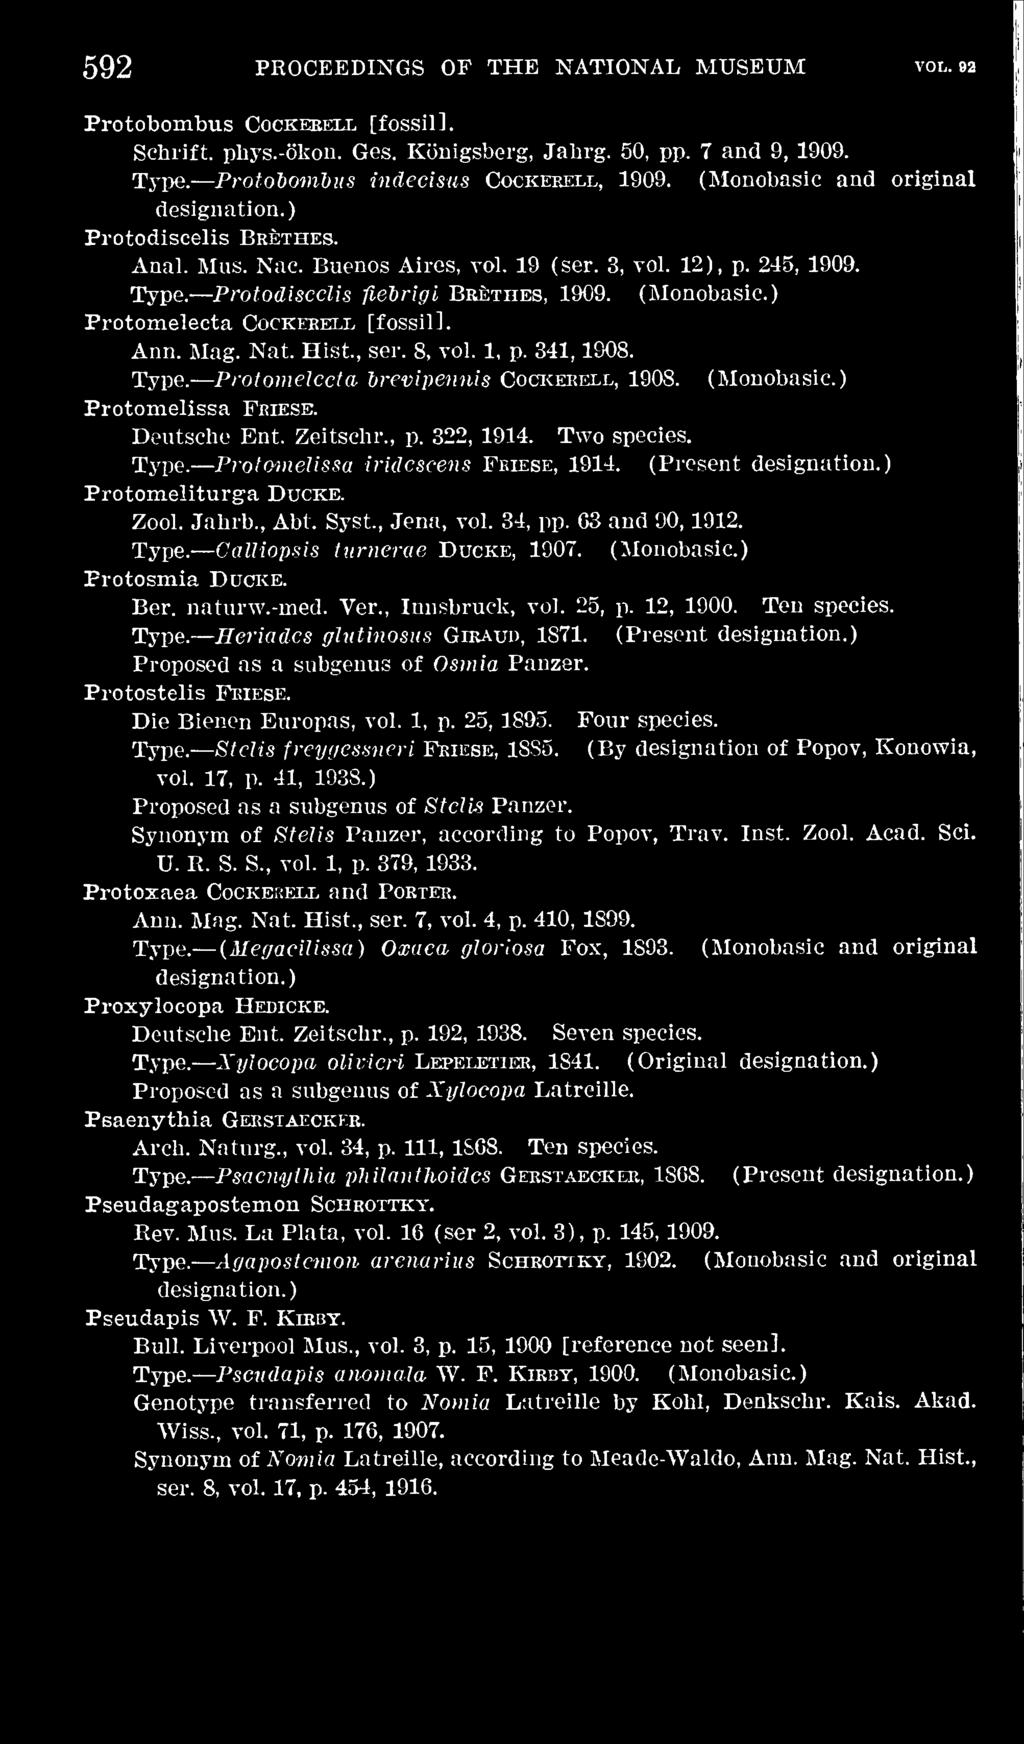 ) Protosmia Ducice. Ber. naturw.-med. Ver., Innsbruck, vol. 25, p. 12, 1900. Ten species. Heriades glutinosns Girauu, 1871. (Present Proposed as a subgenus of Osmia Panzer. Protostelis Feiese.